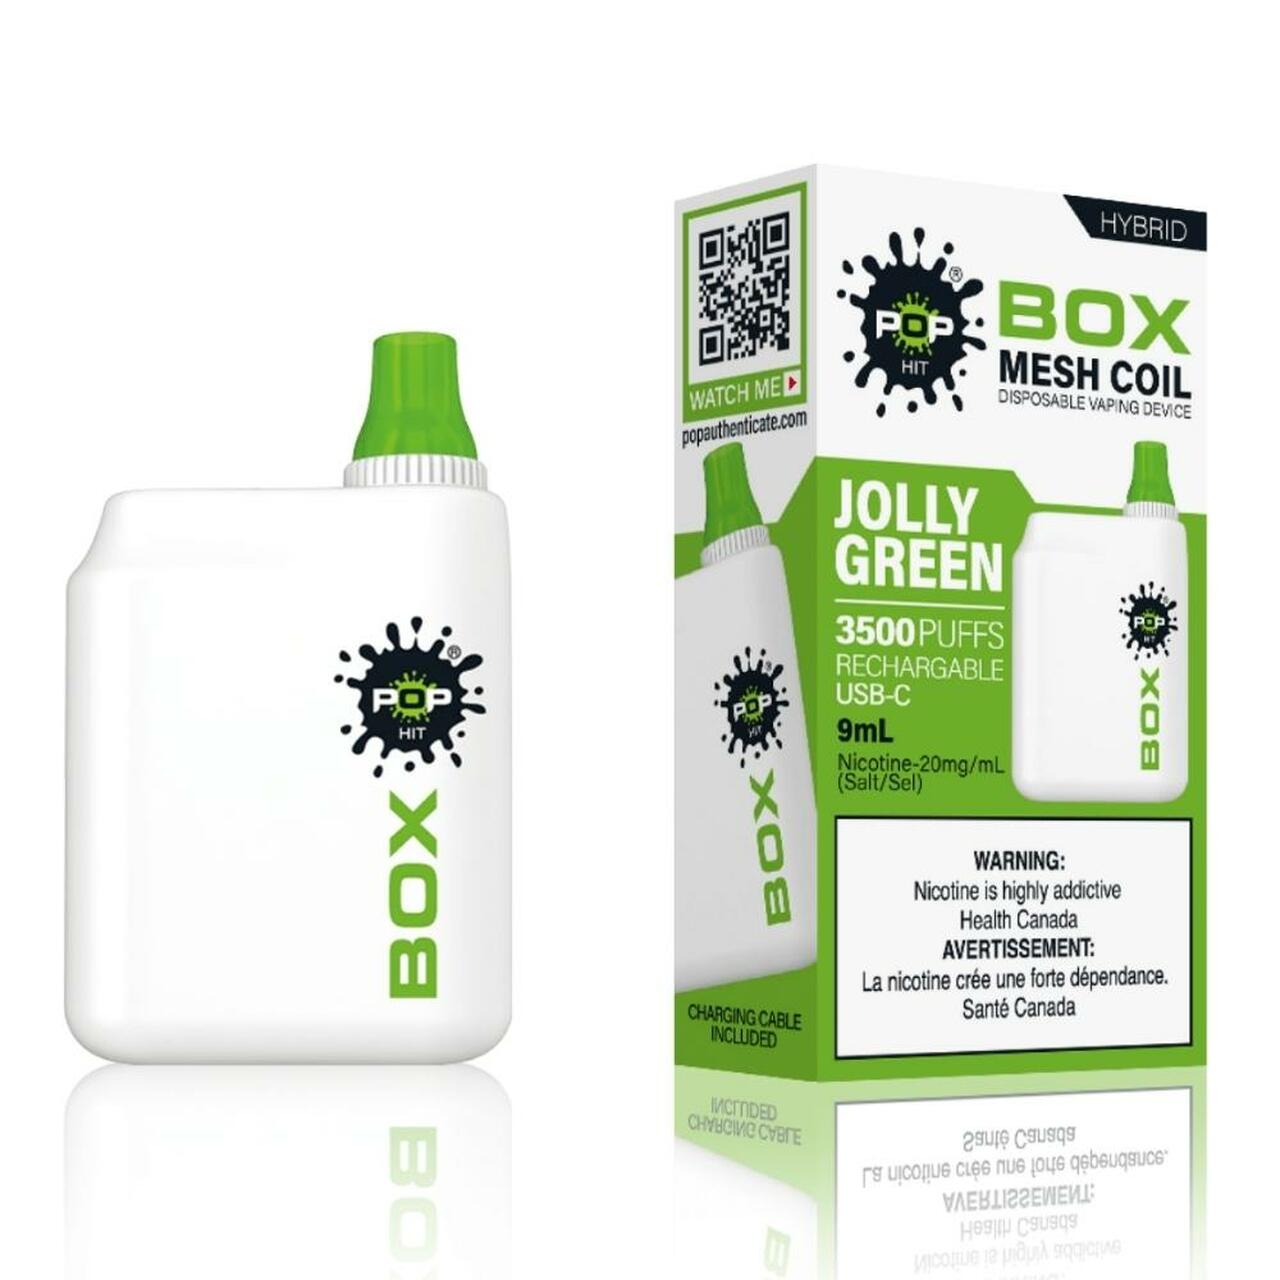 Jolly Green - Pop Hybrid BOX 3500 Puffs - 5pc/box